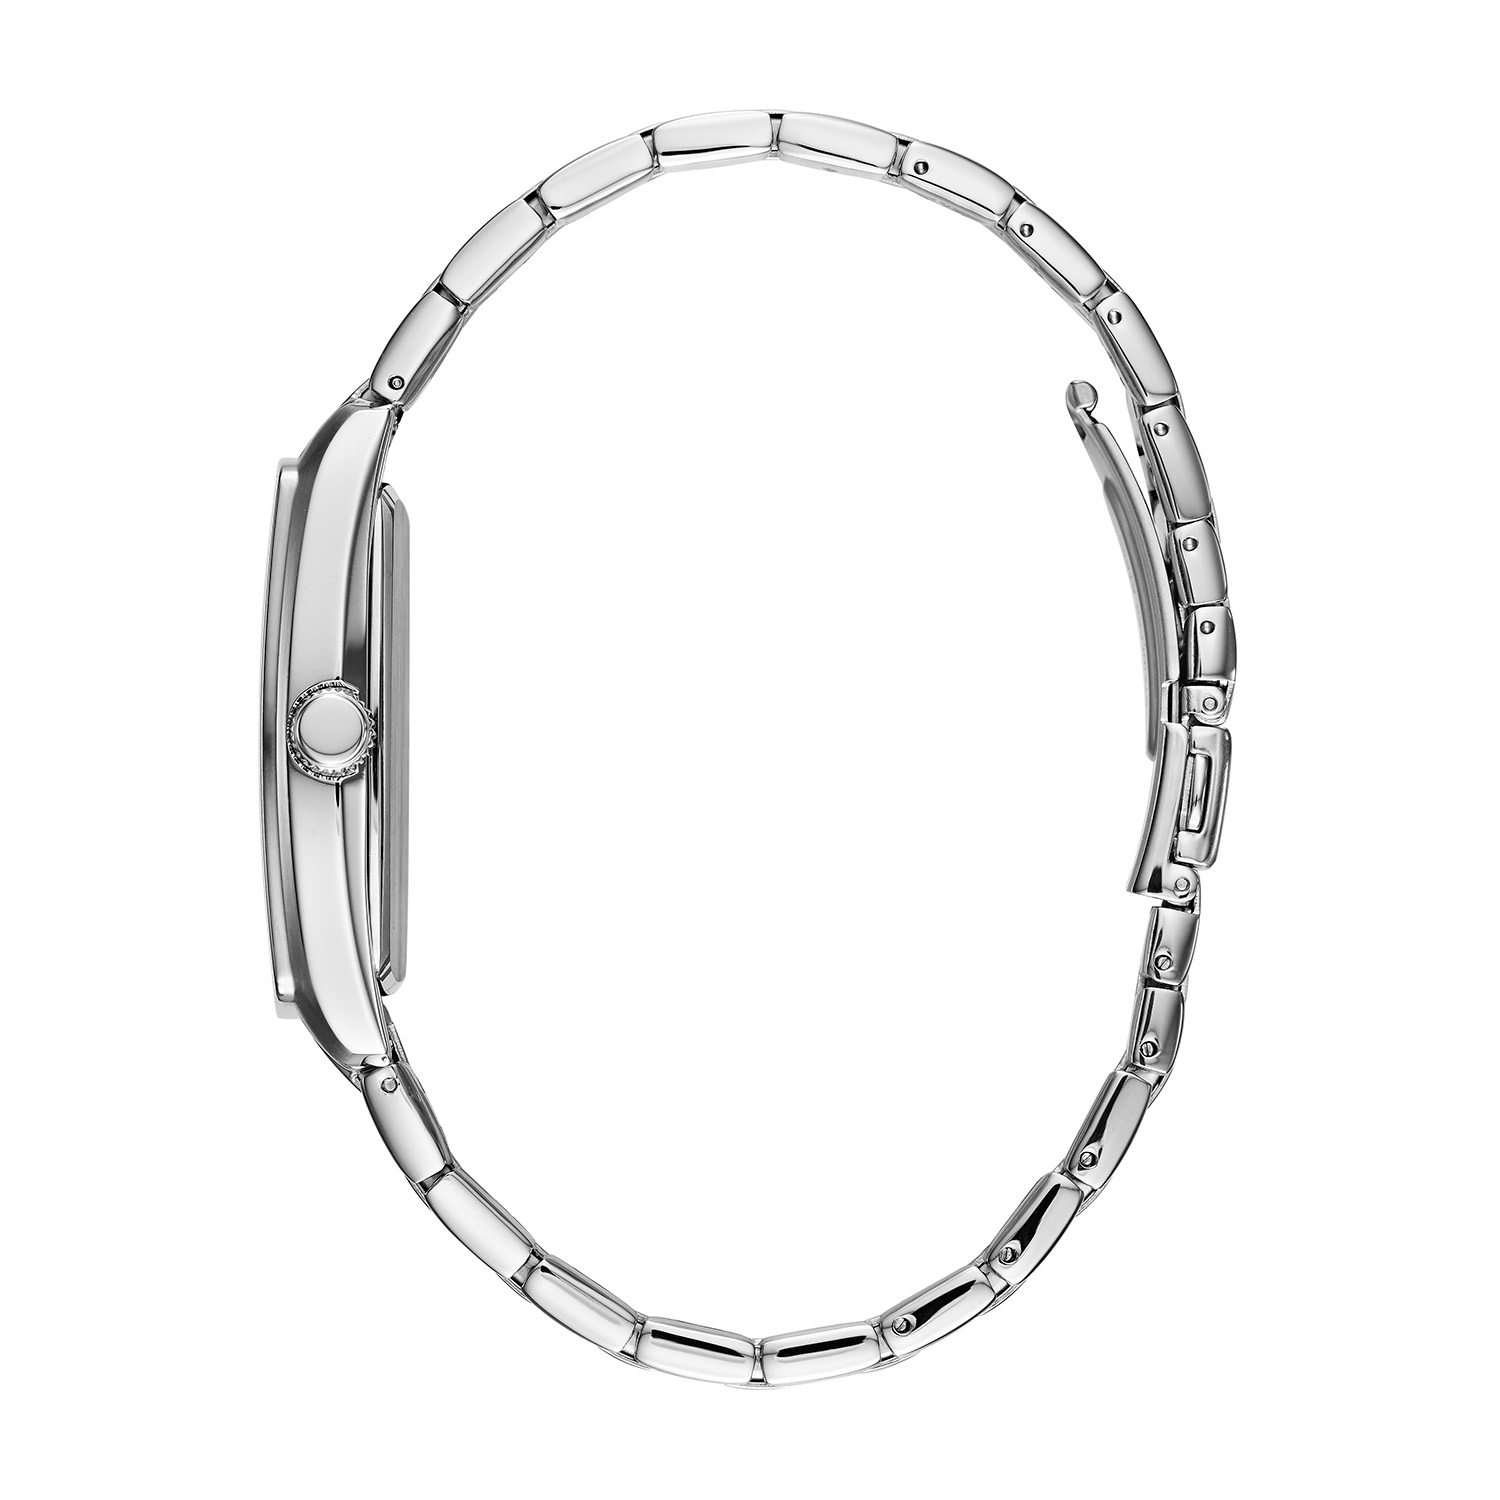 Caravelle Designed By Bulova Men's Barrel Chronograph Stainless Steel Bracelet Dress Watch 43C118 - image 3 of 3